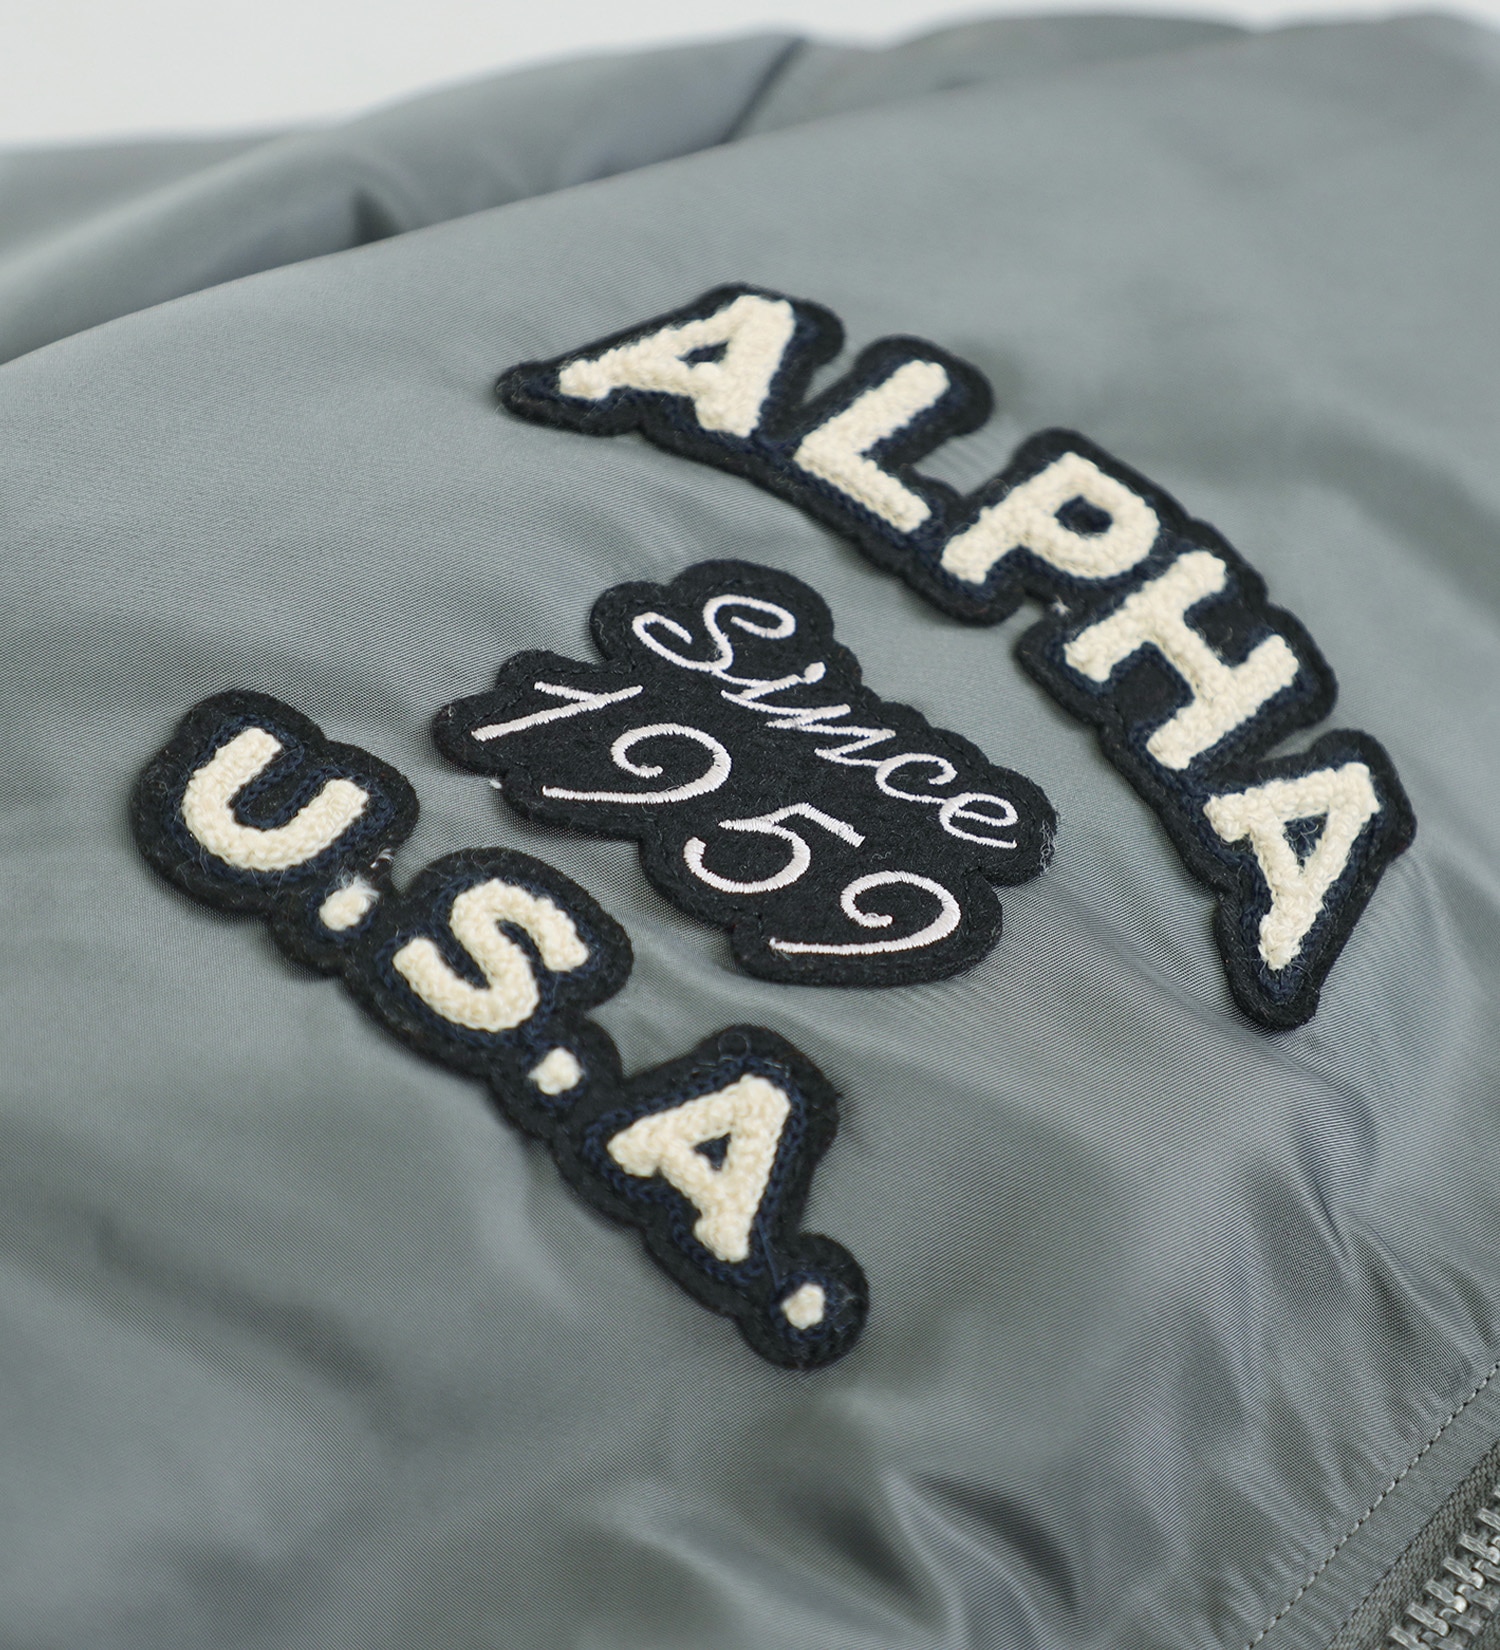 ALPHA(アルファ)の【直営店限定】スタジャン風MA-1 USスペック|ジャケット/アウター/ミリタリージャケット/メンズ|ガンメタ